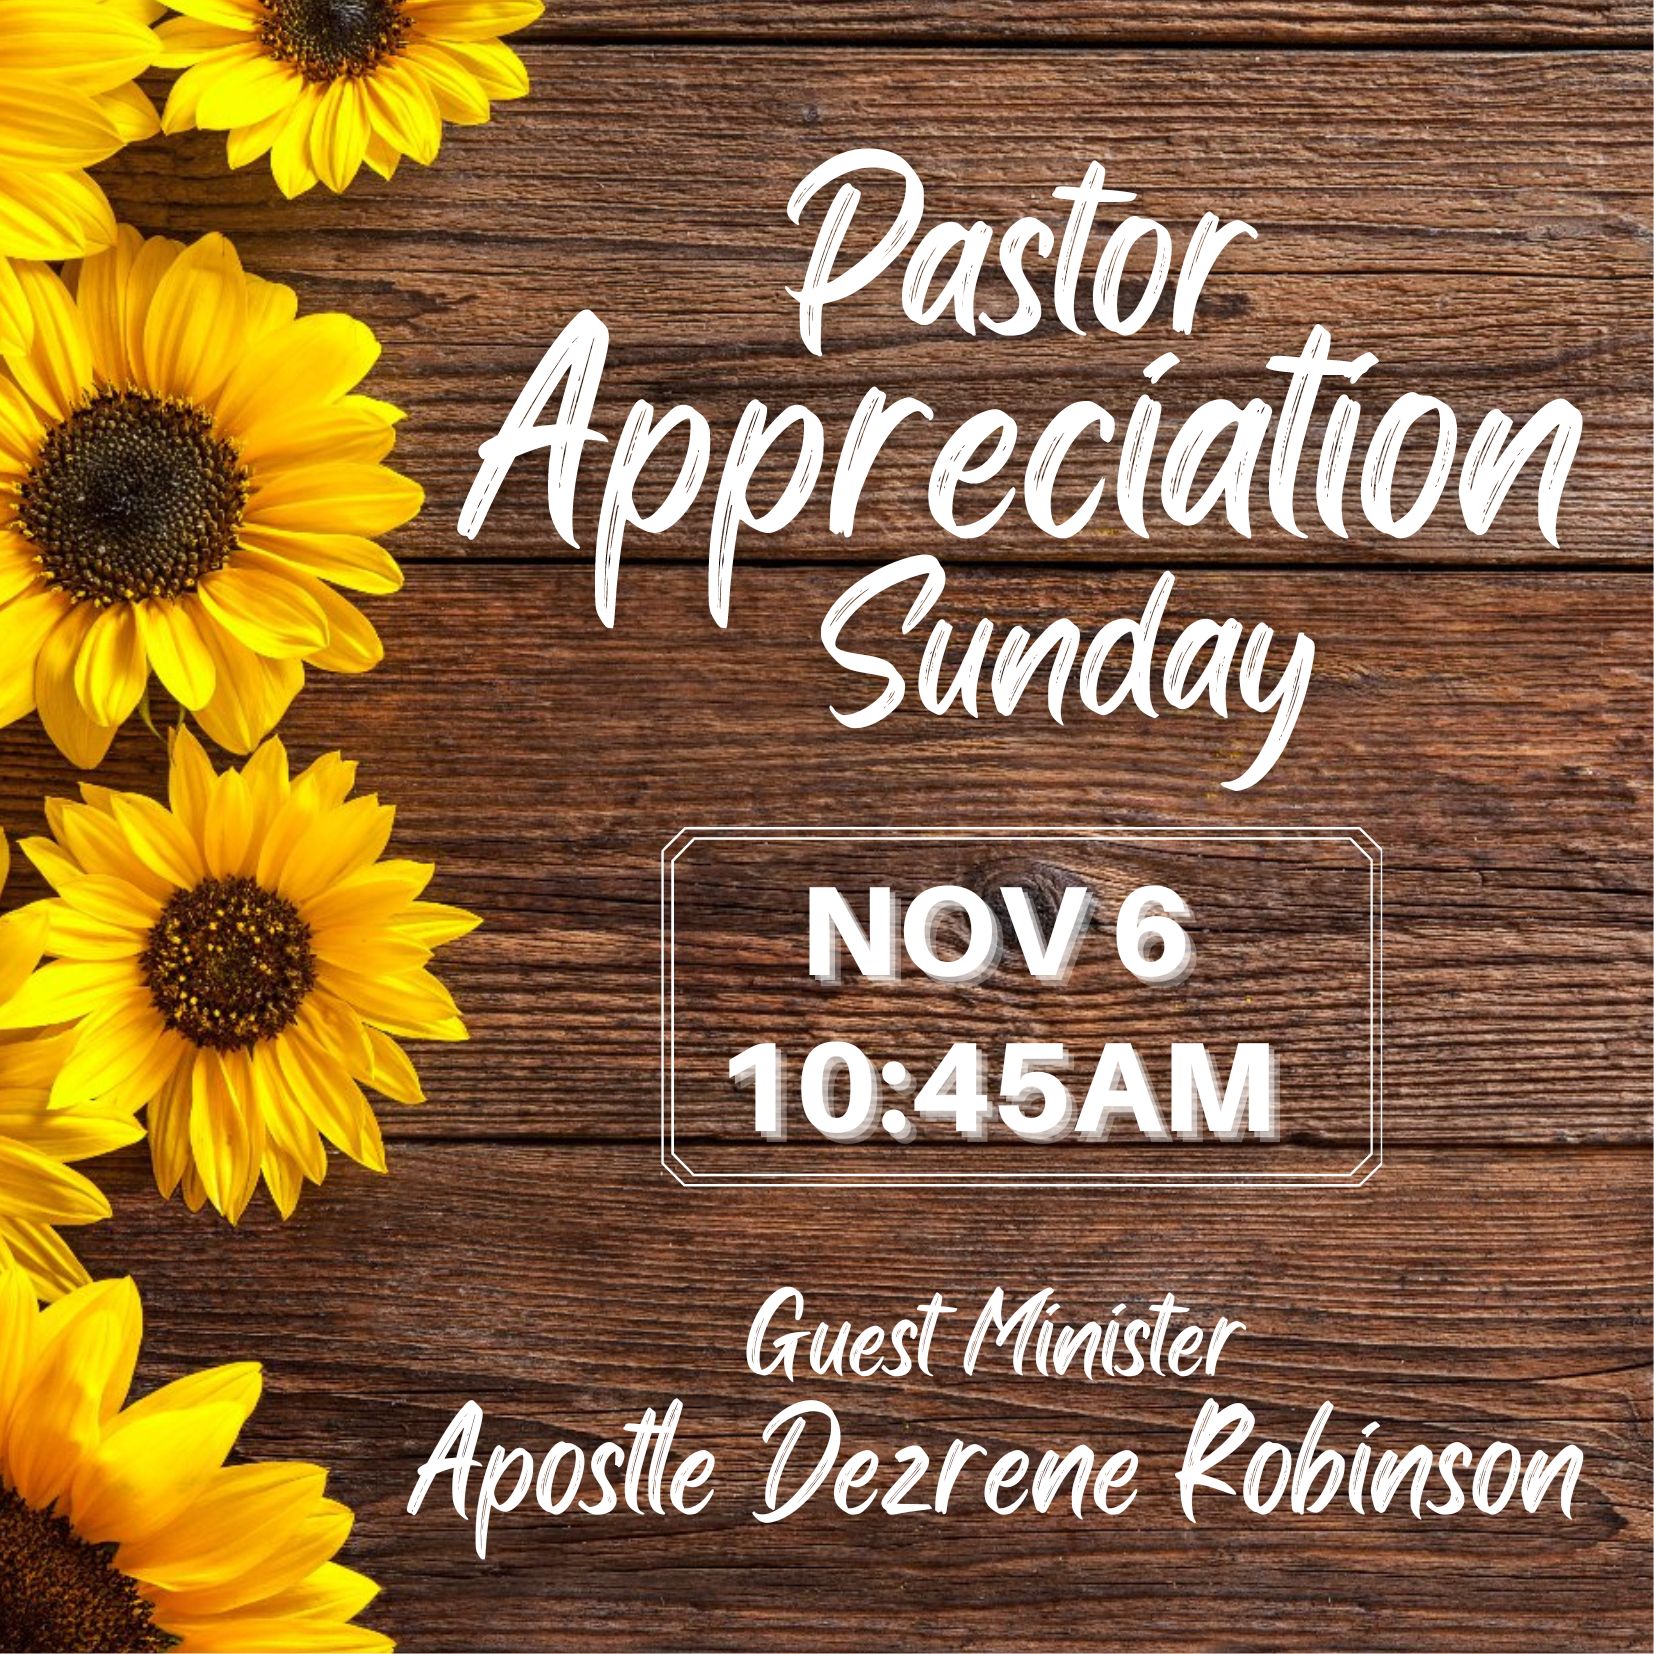 PASTOR APPRECIATION SUNDAY WITH GUEST MINISTER APOSTLE DEZRENE ROBINSON